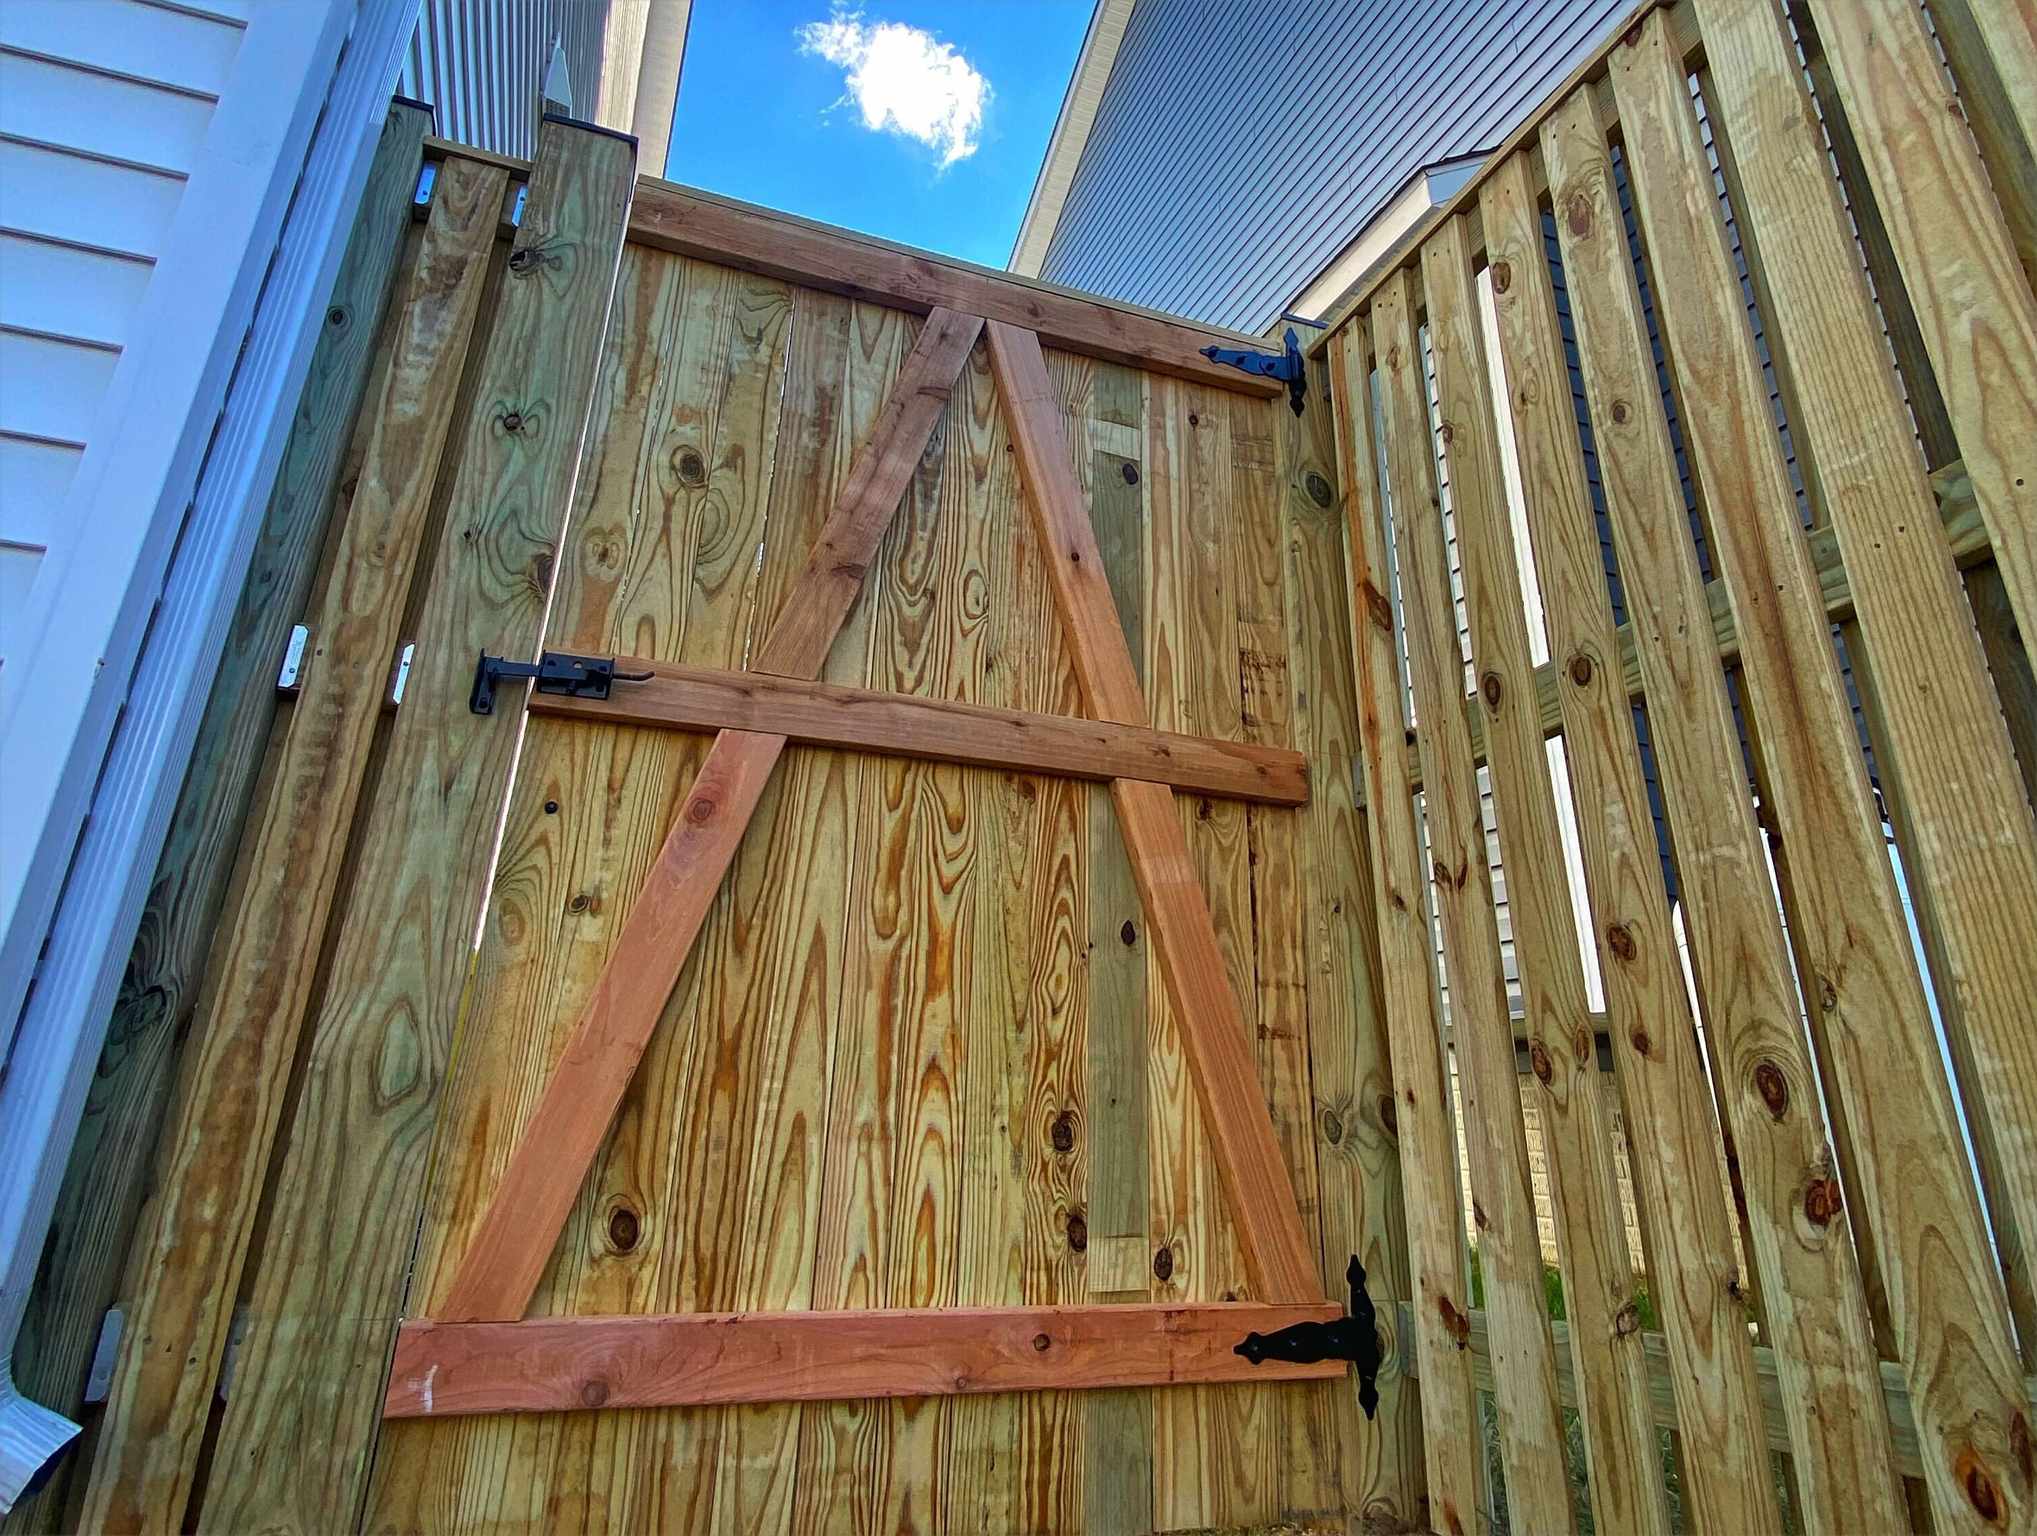 A-frame gates